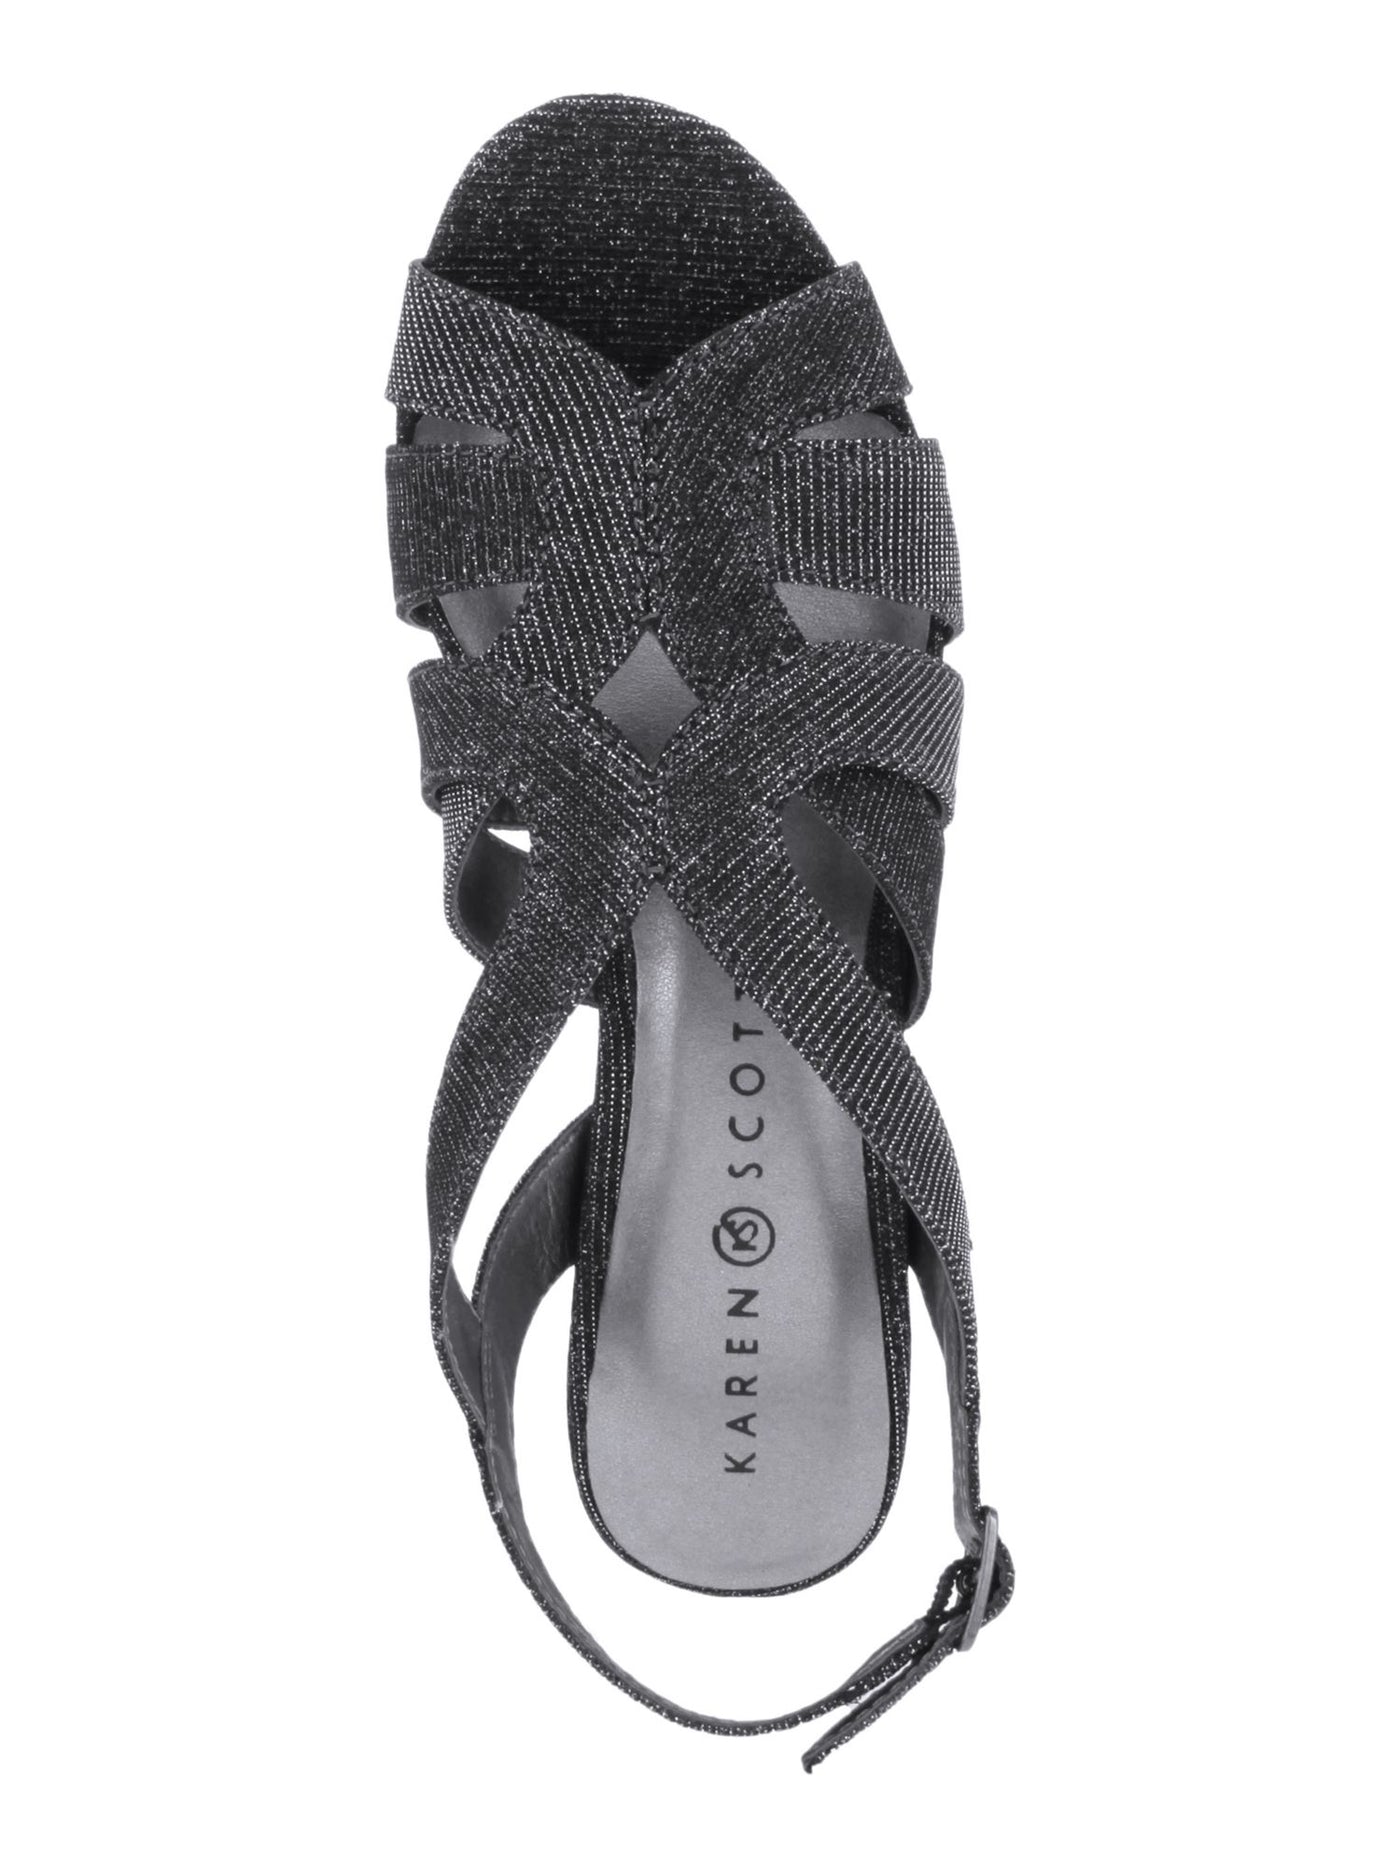 KAREN SCOTT Womens Gray Glitter Cushioned Belindah Peep Toe Stiletto Buckle Dress Sandals 6.5 M